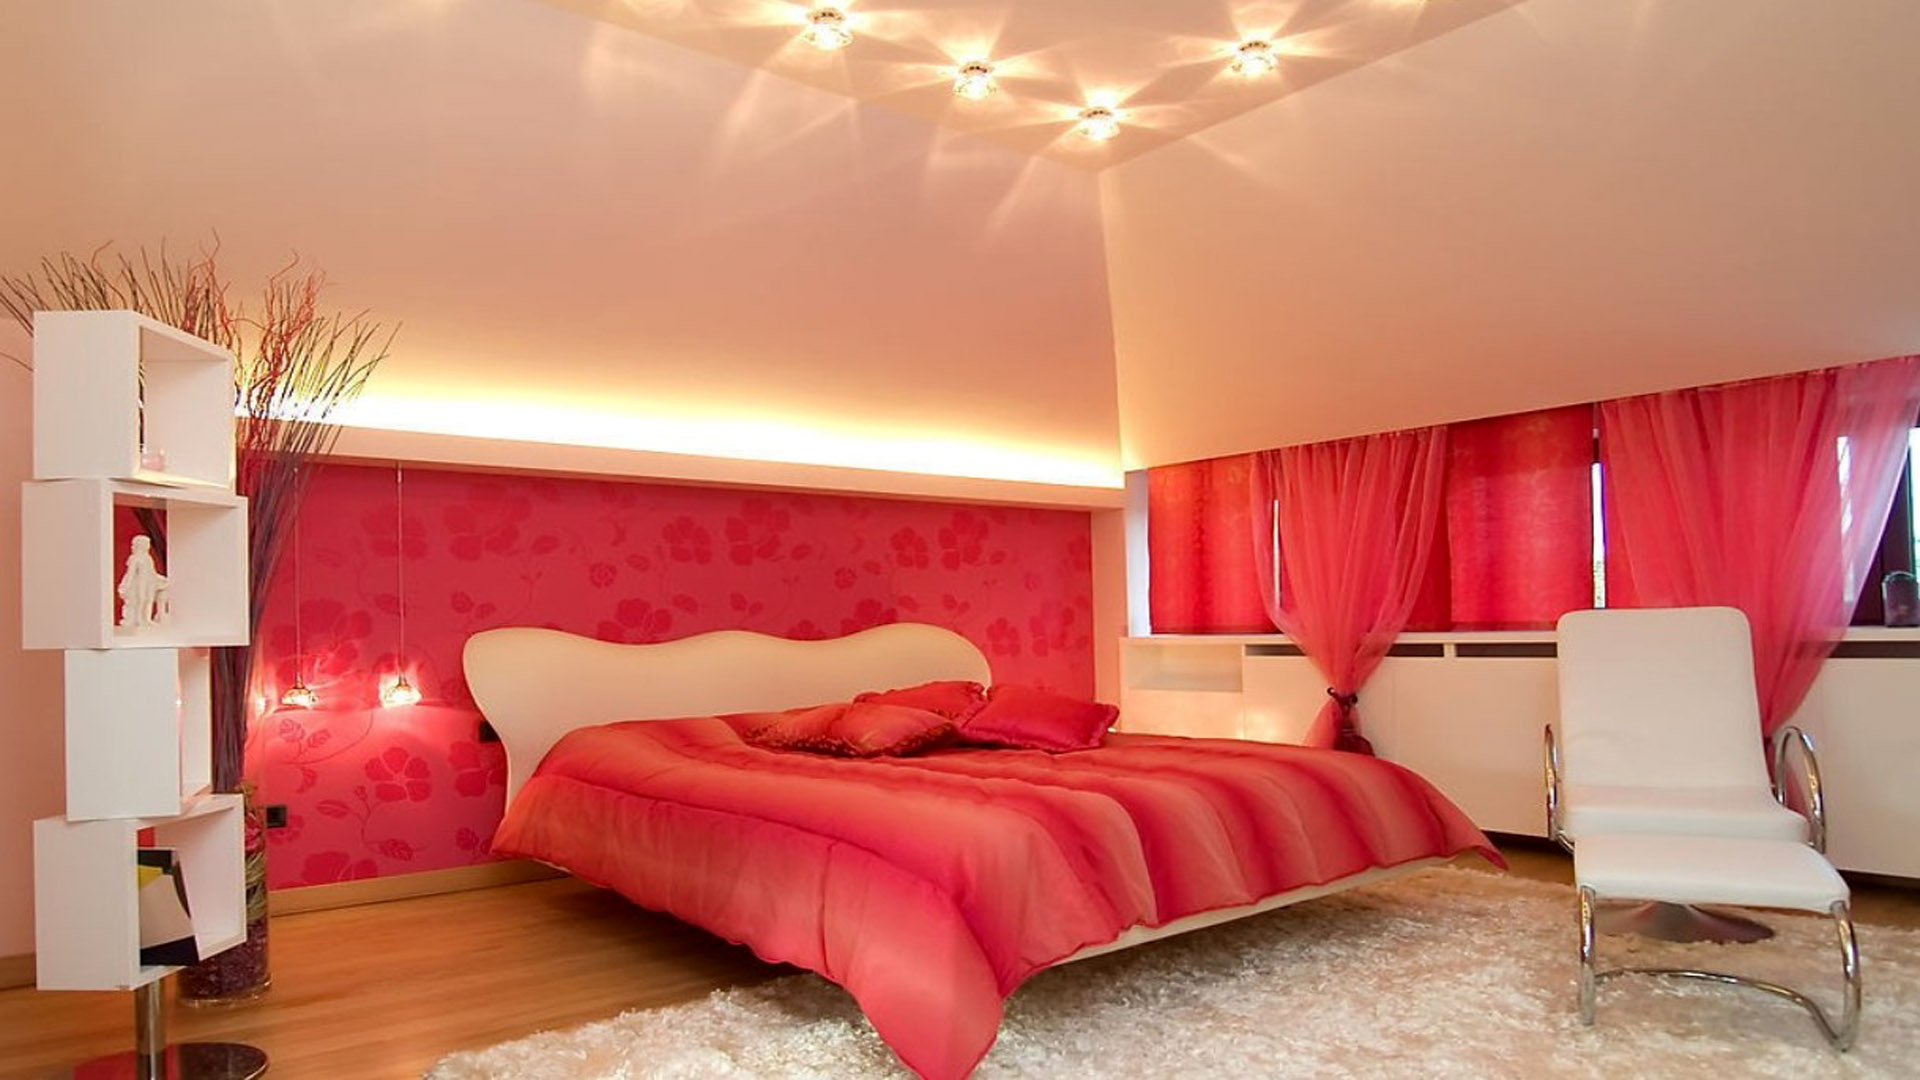 beautiful bedroom wallpaper,bedroom,furniture,room,bed,ceiling